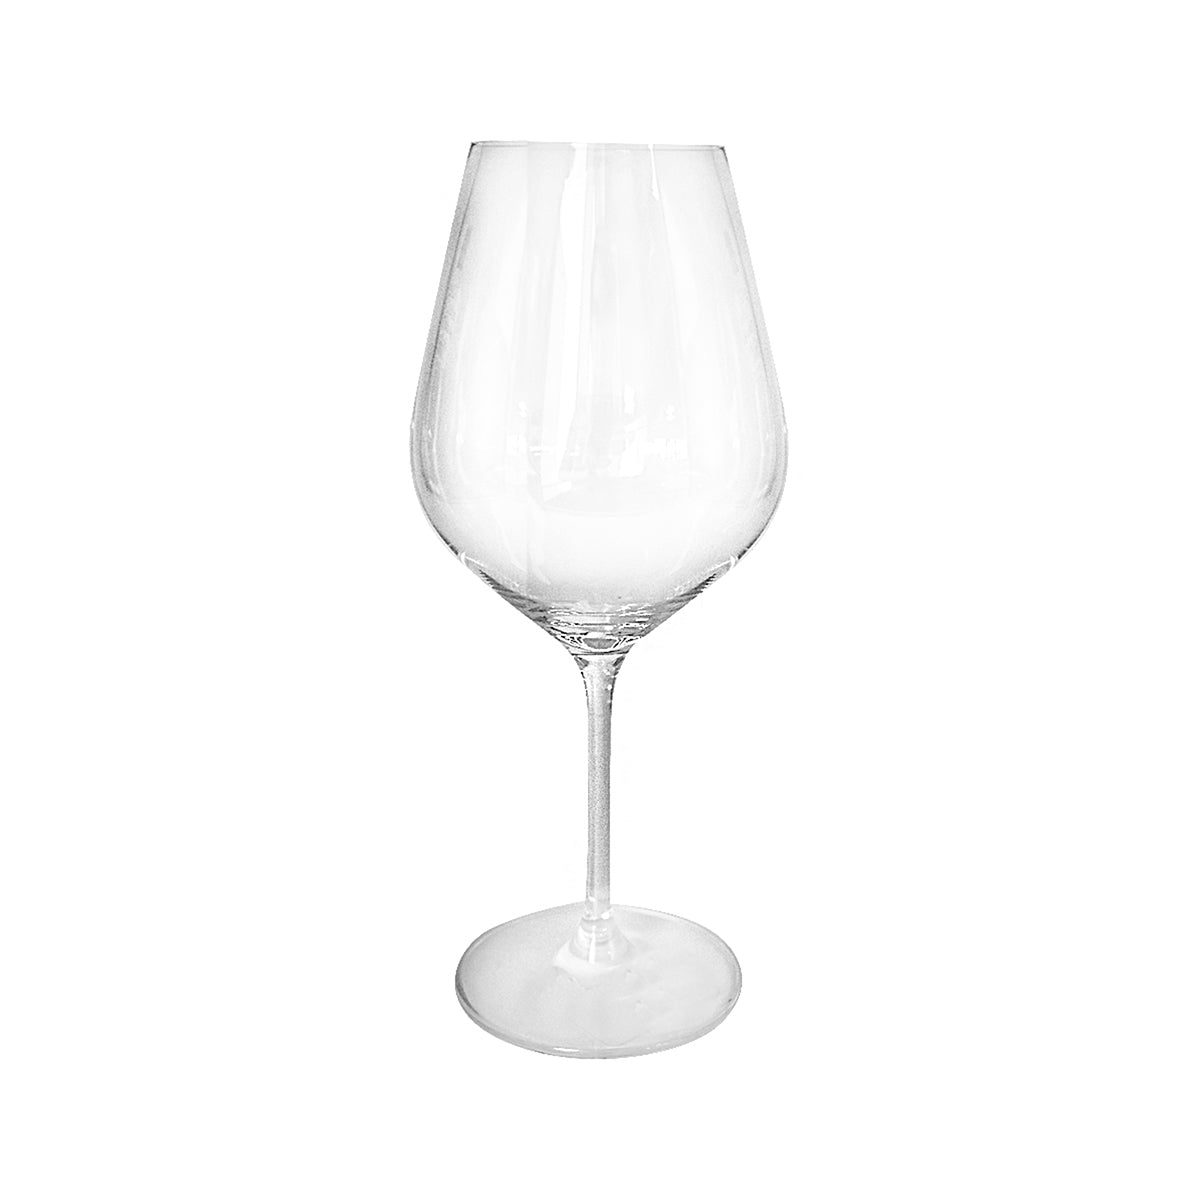  Copas de vino tinto de cristal – Elegante copa de vino